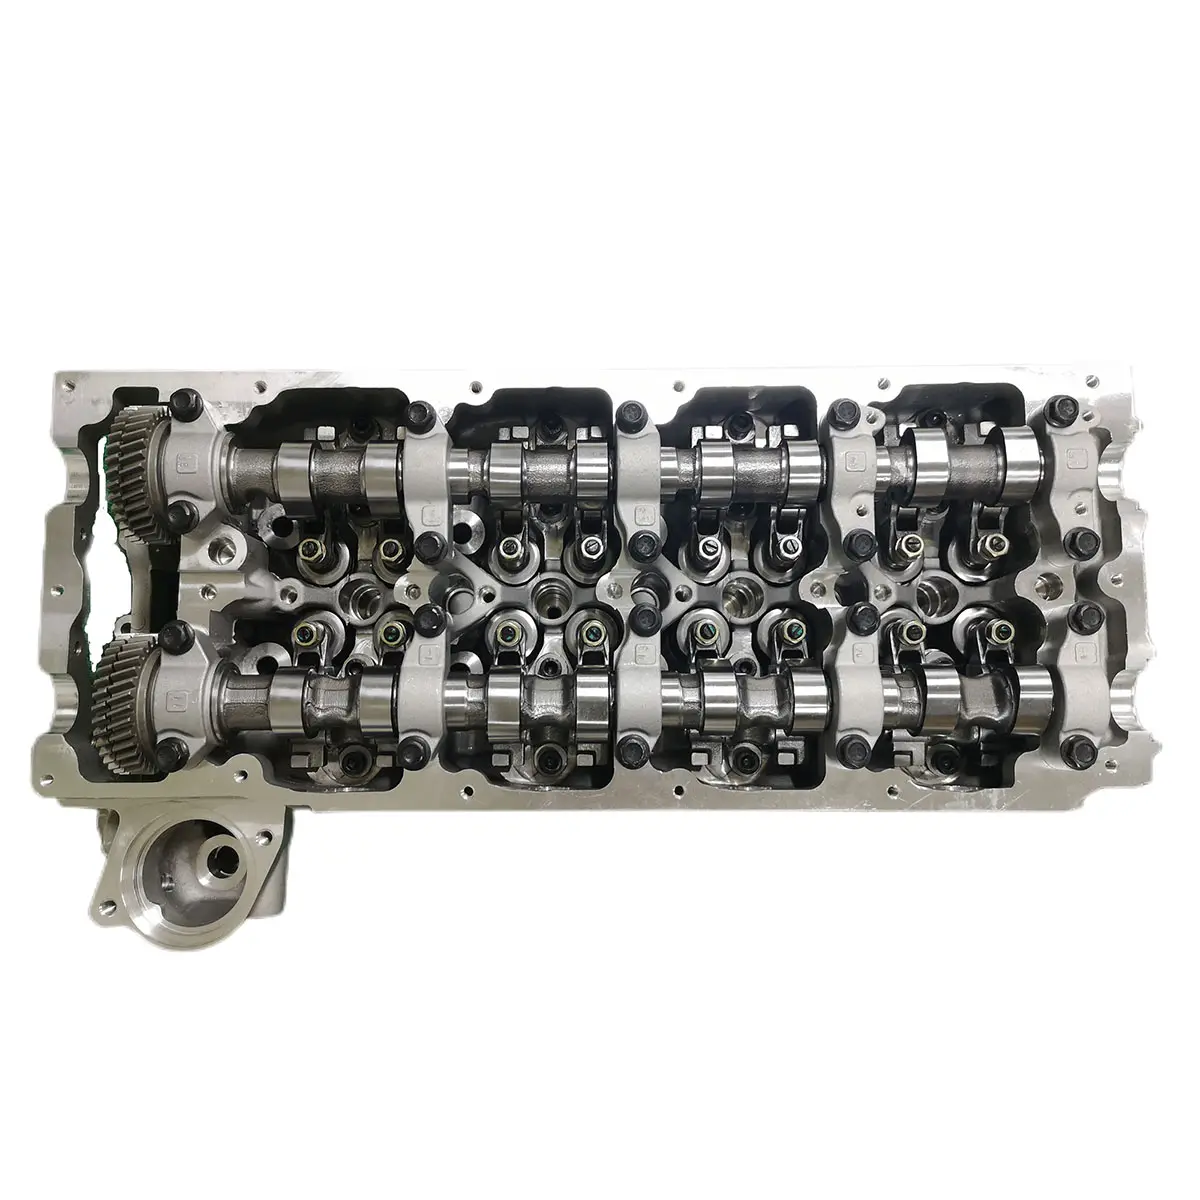 Wholesale 4JJ1 Engine Complete Overhaul Rebuild Kit Cylinder Head Assy with Camshaft For Isuzu